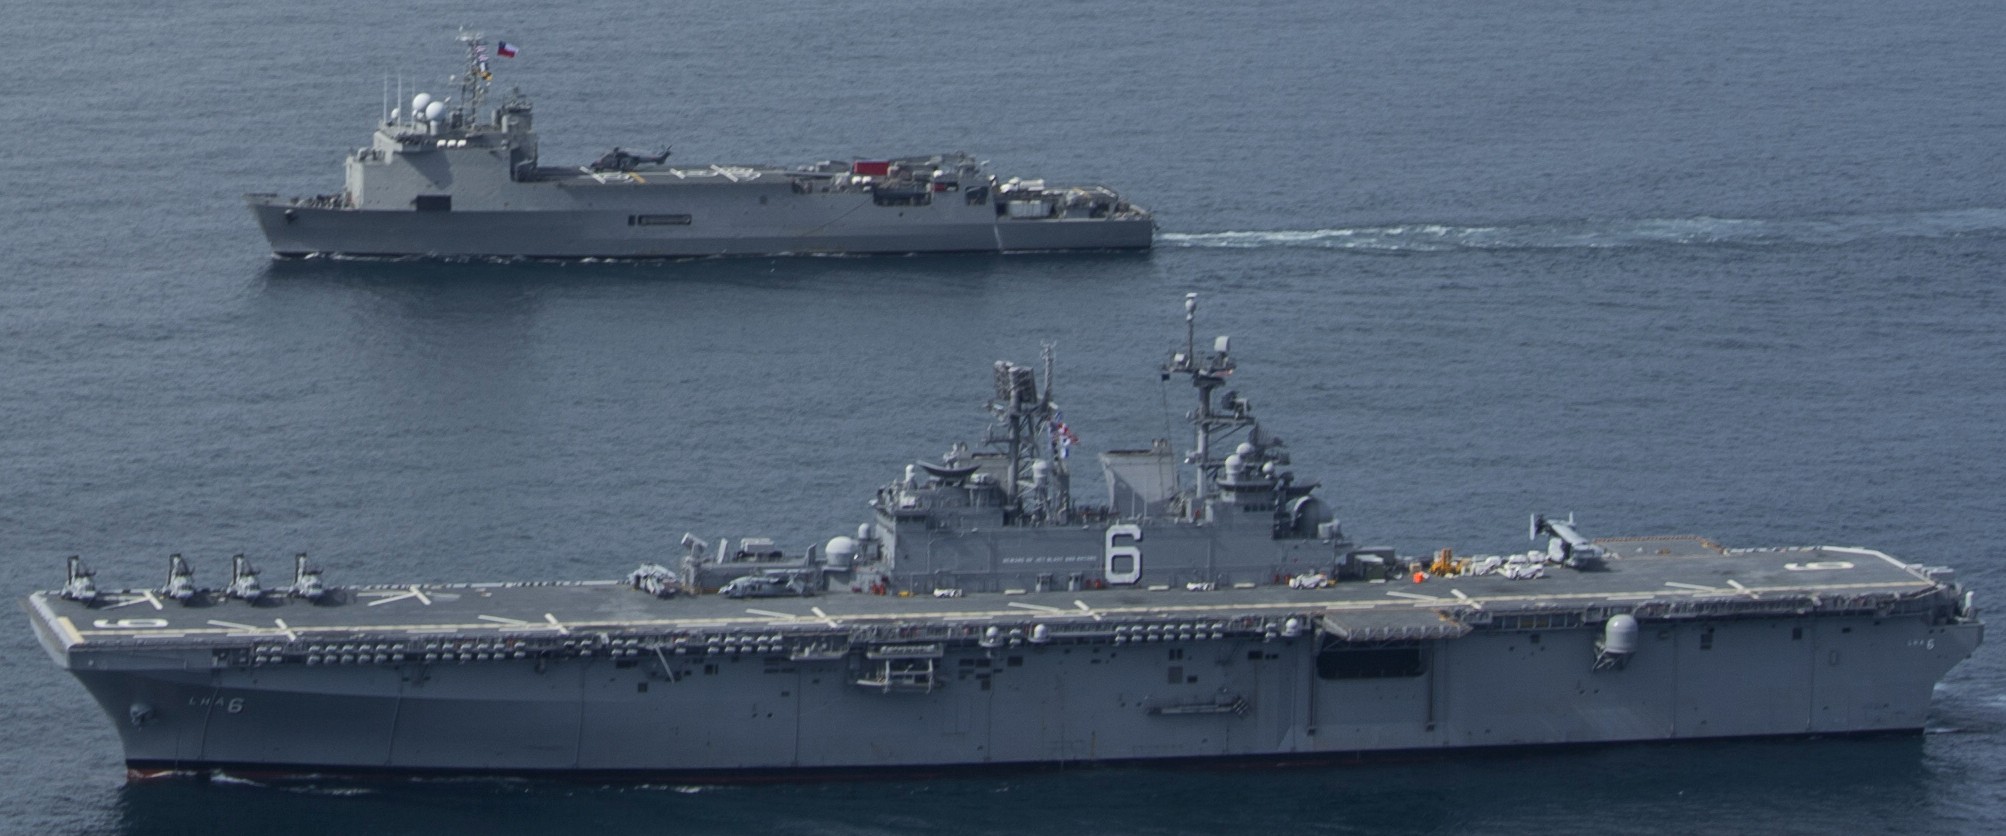 lha-6 uss america amphibious assault ship landing us navy off chile 141